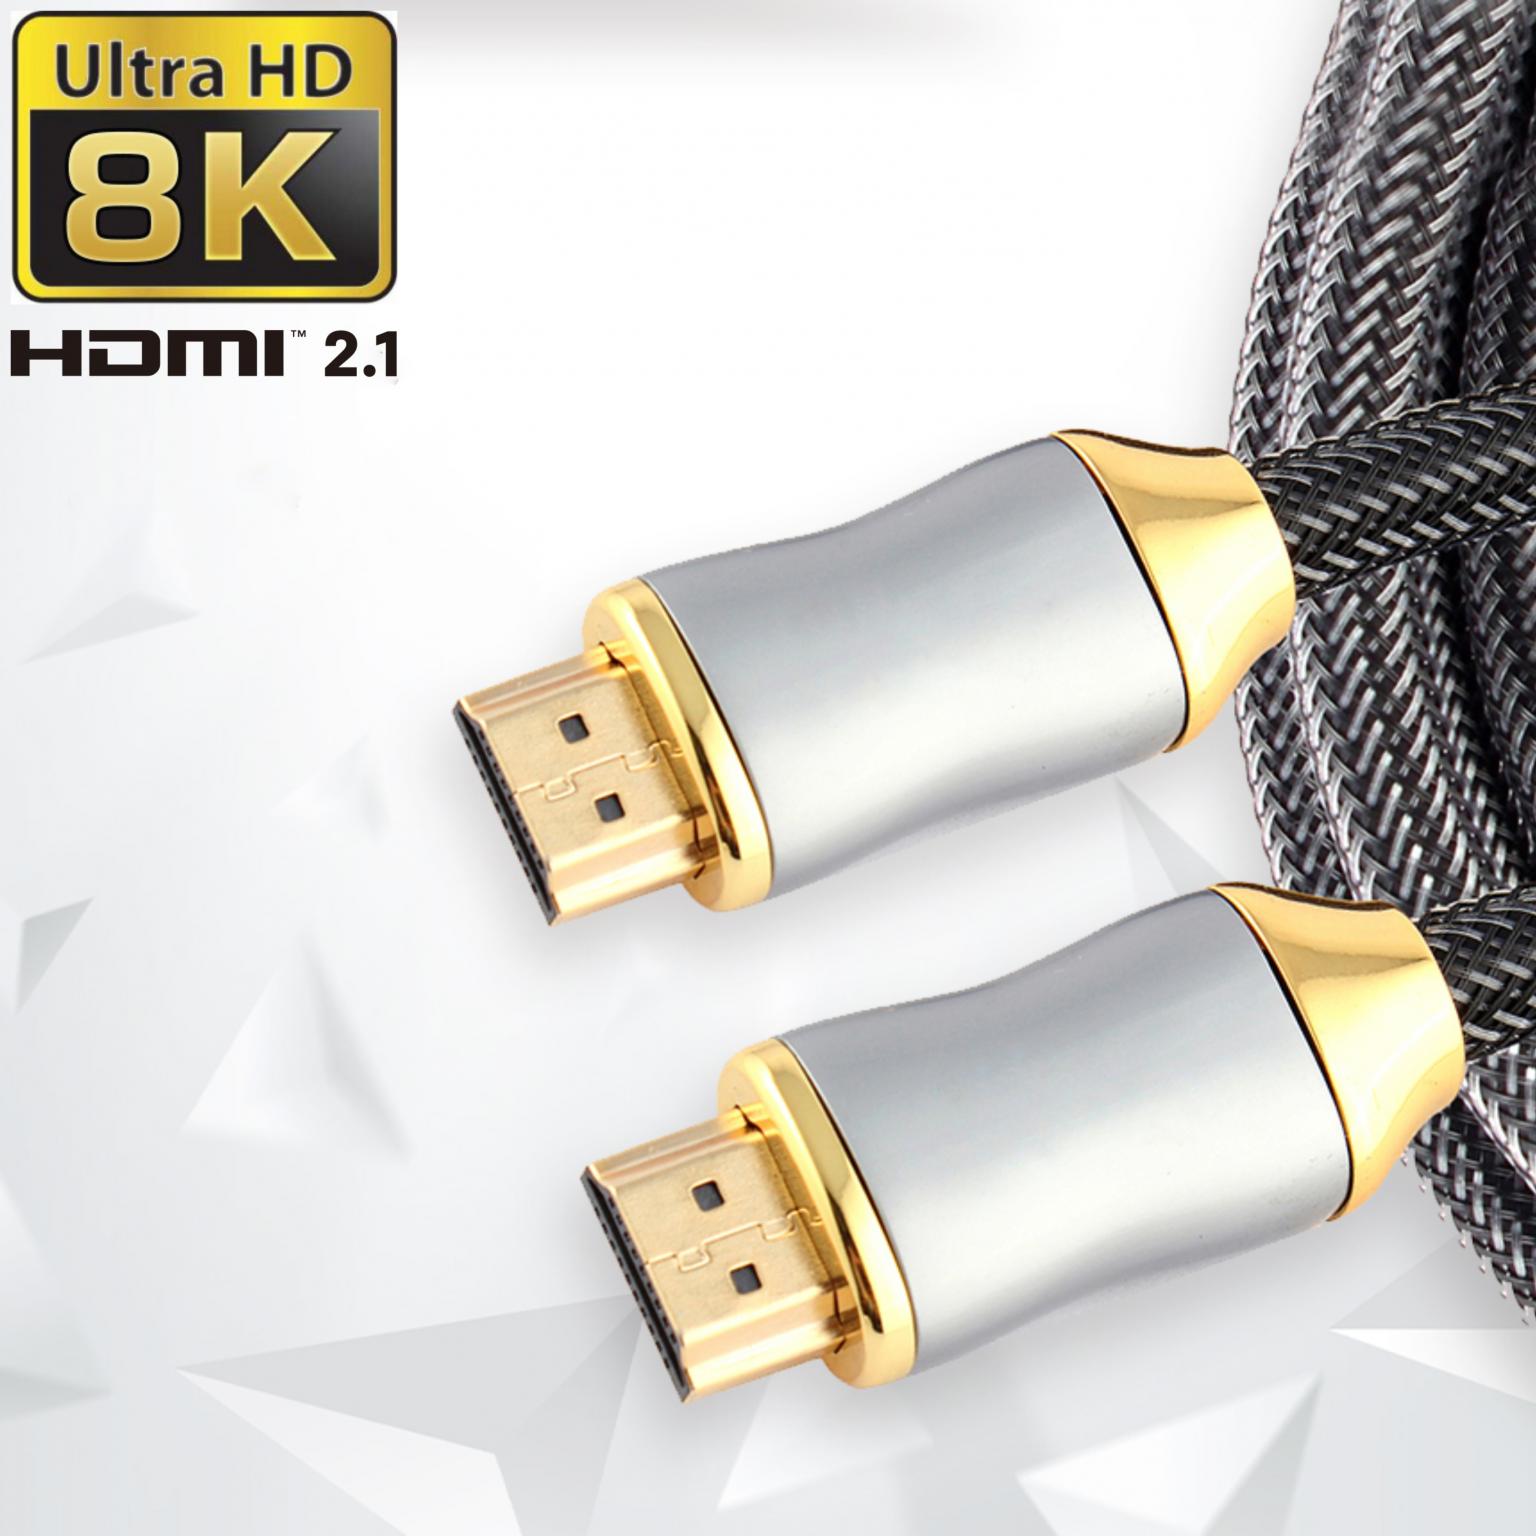 Balling Ochtend gymnastiek Collega HDMI kabel - Versie: 2.1 - Ultra High Speed, Verguld: Ja, Aansluiting 1:  HDMI A male, Aansluiting 2: HDMI A male, Lengte: 0.5 meter.